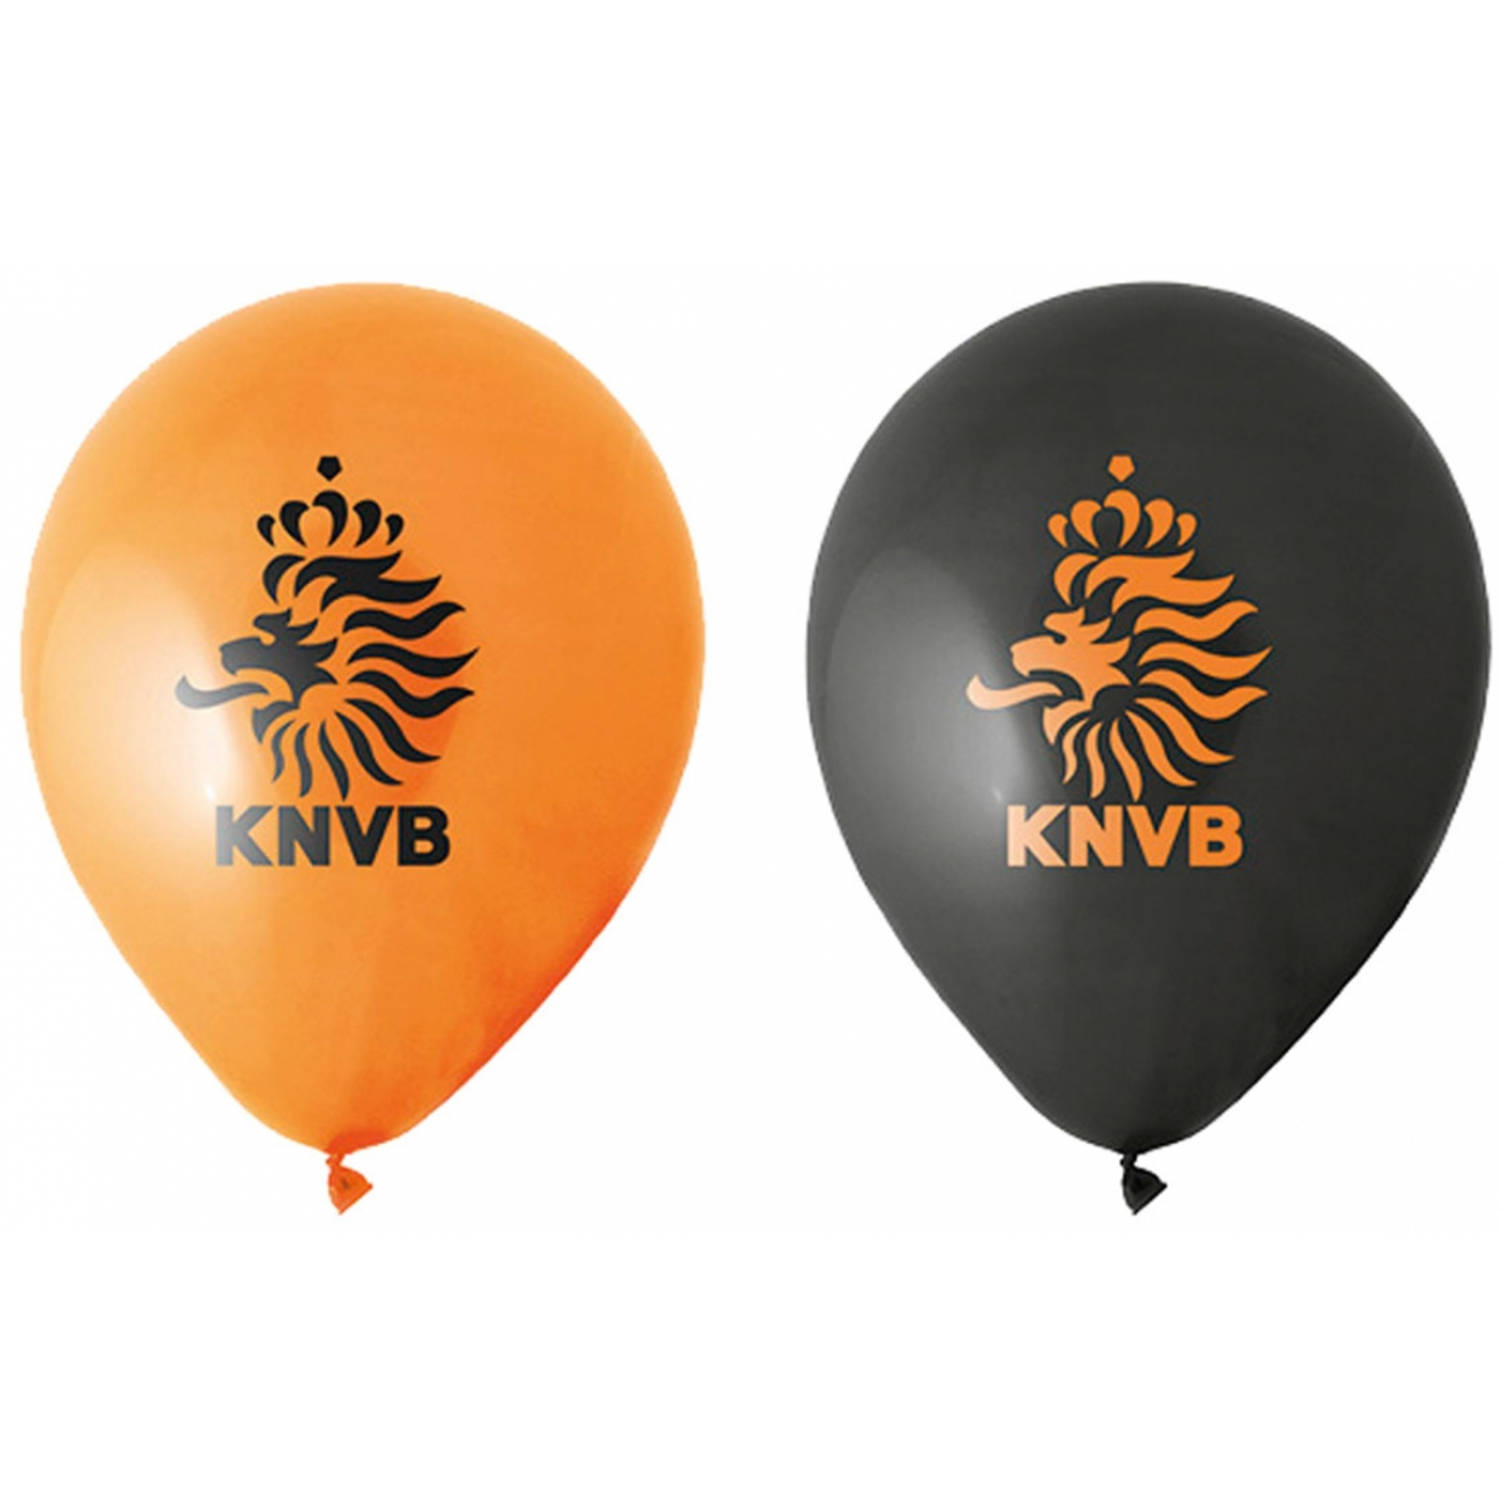 16x stuks Oranje en zwarte KNVB voetbal ballonnen - Ballonnen